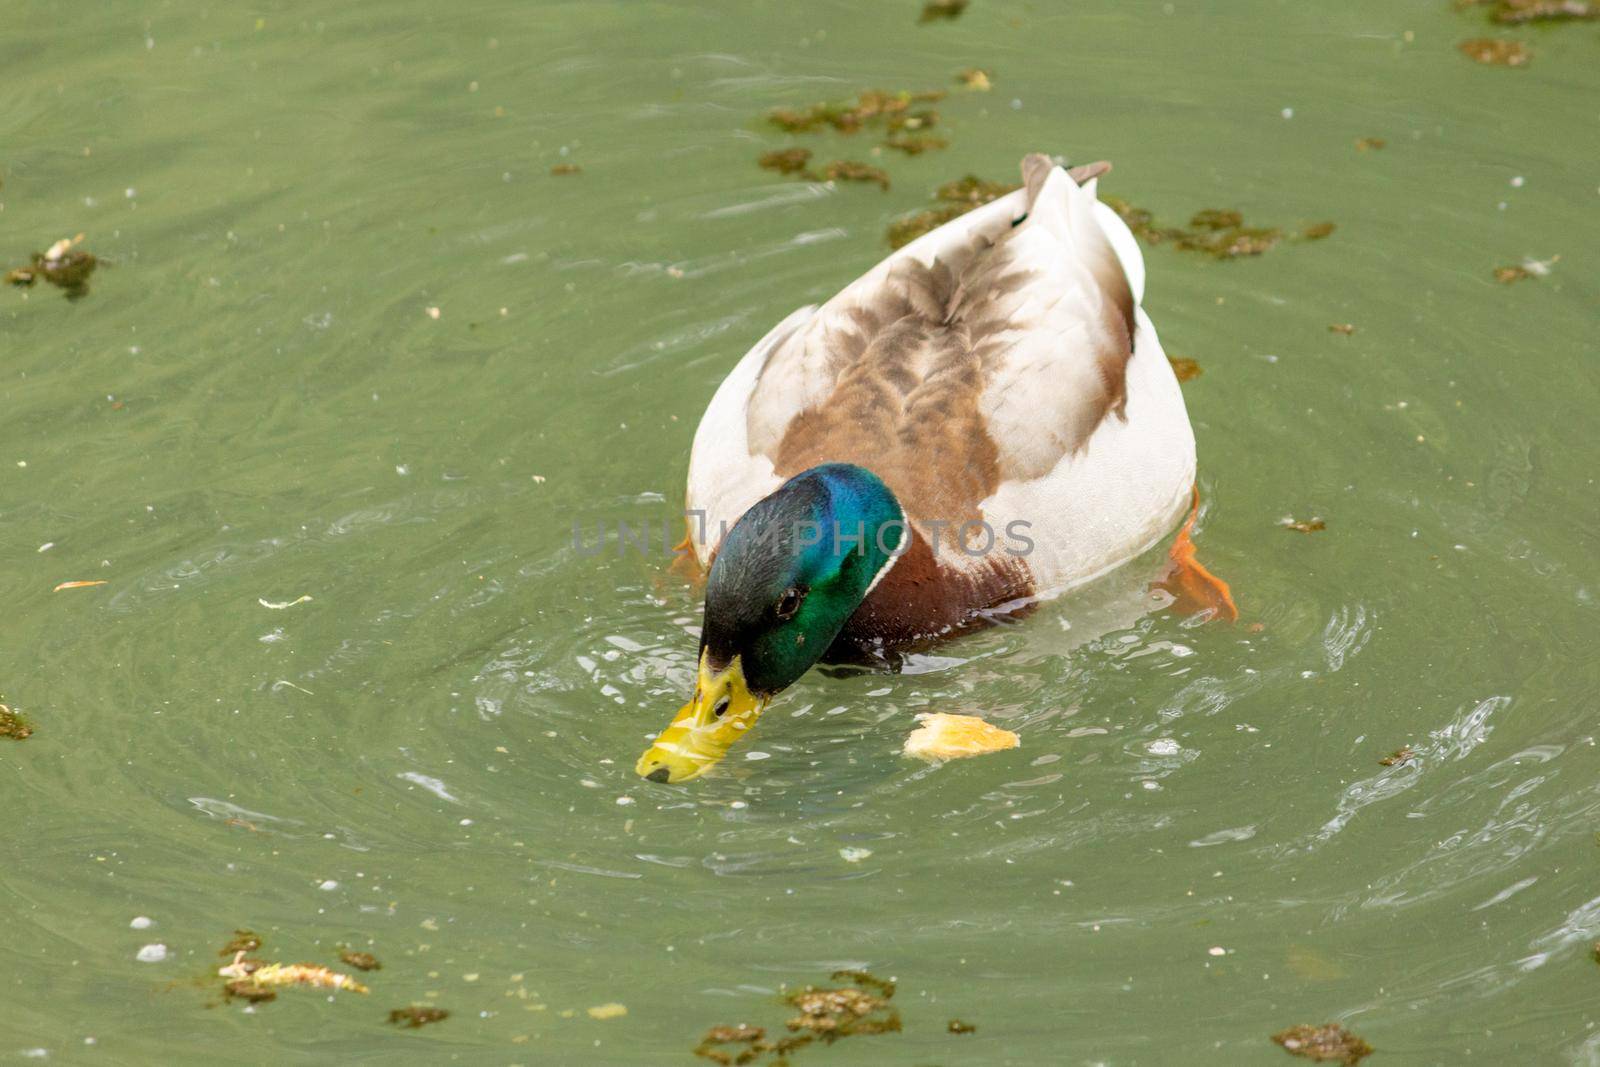 A duck swimming in a body of water by SorokinNikita